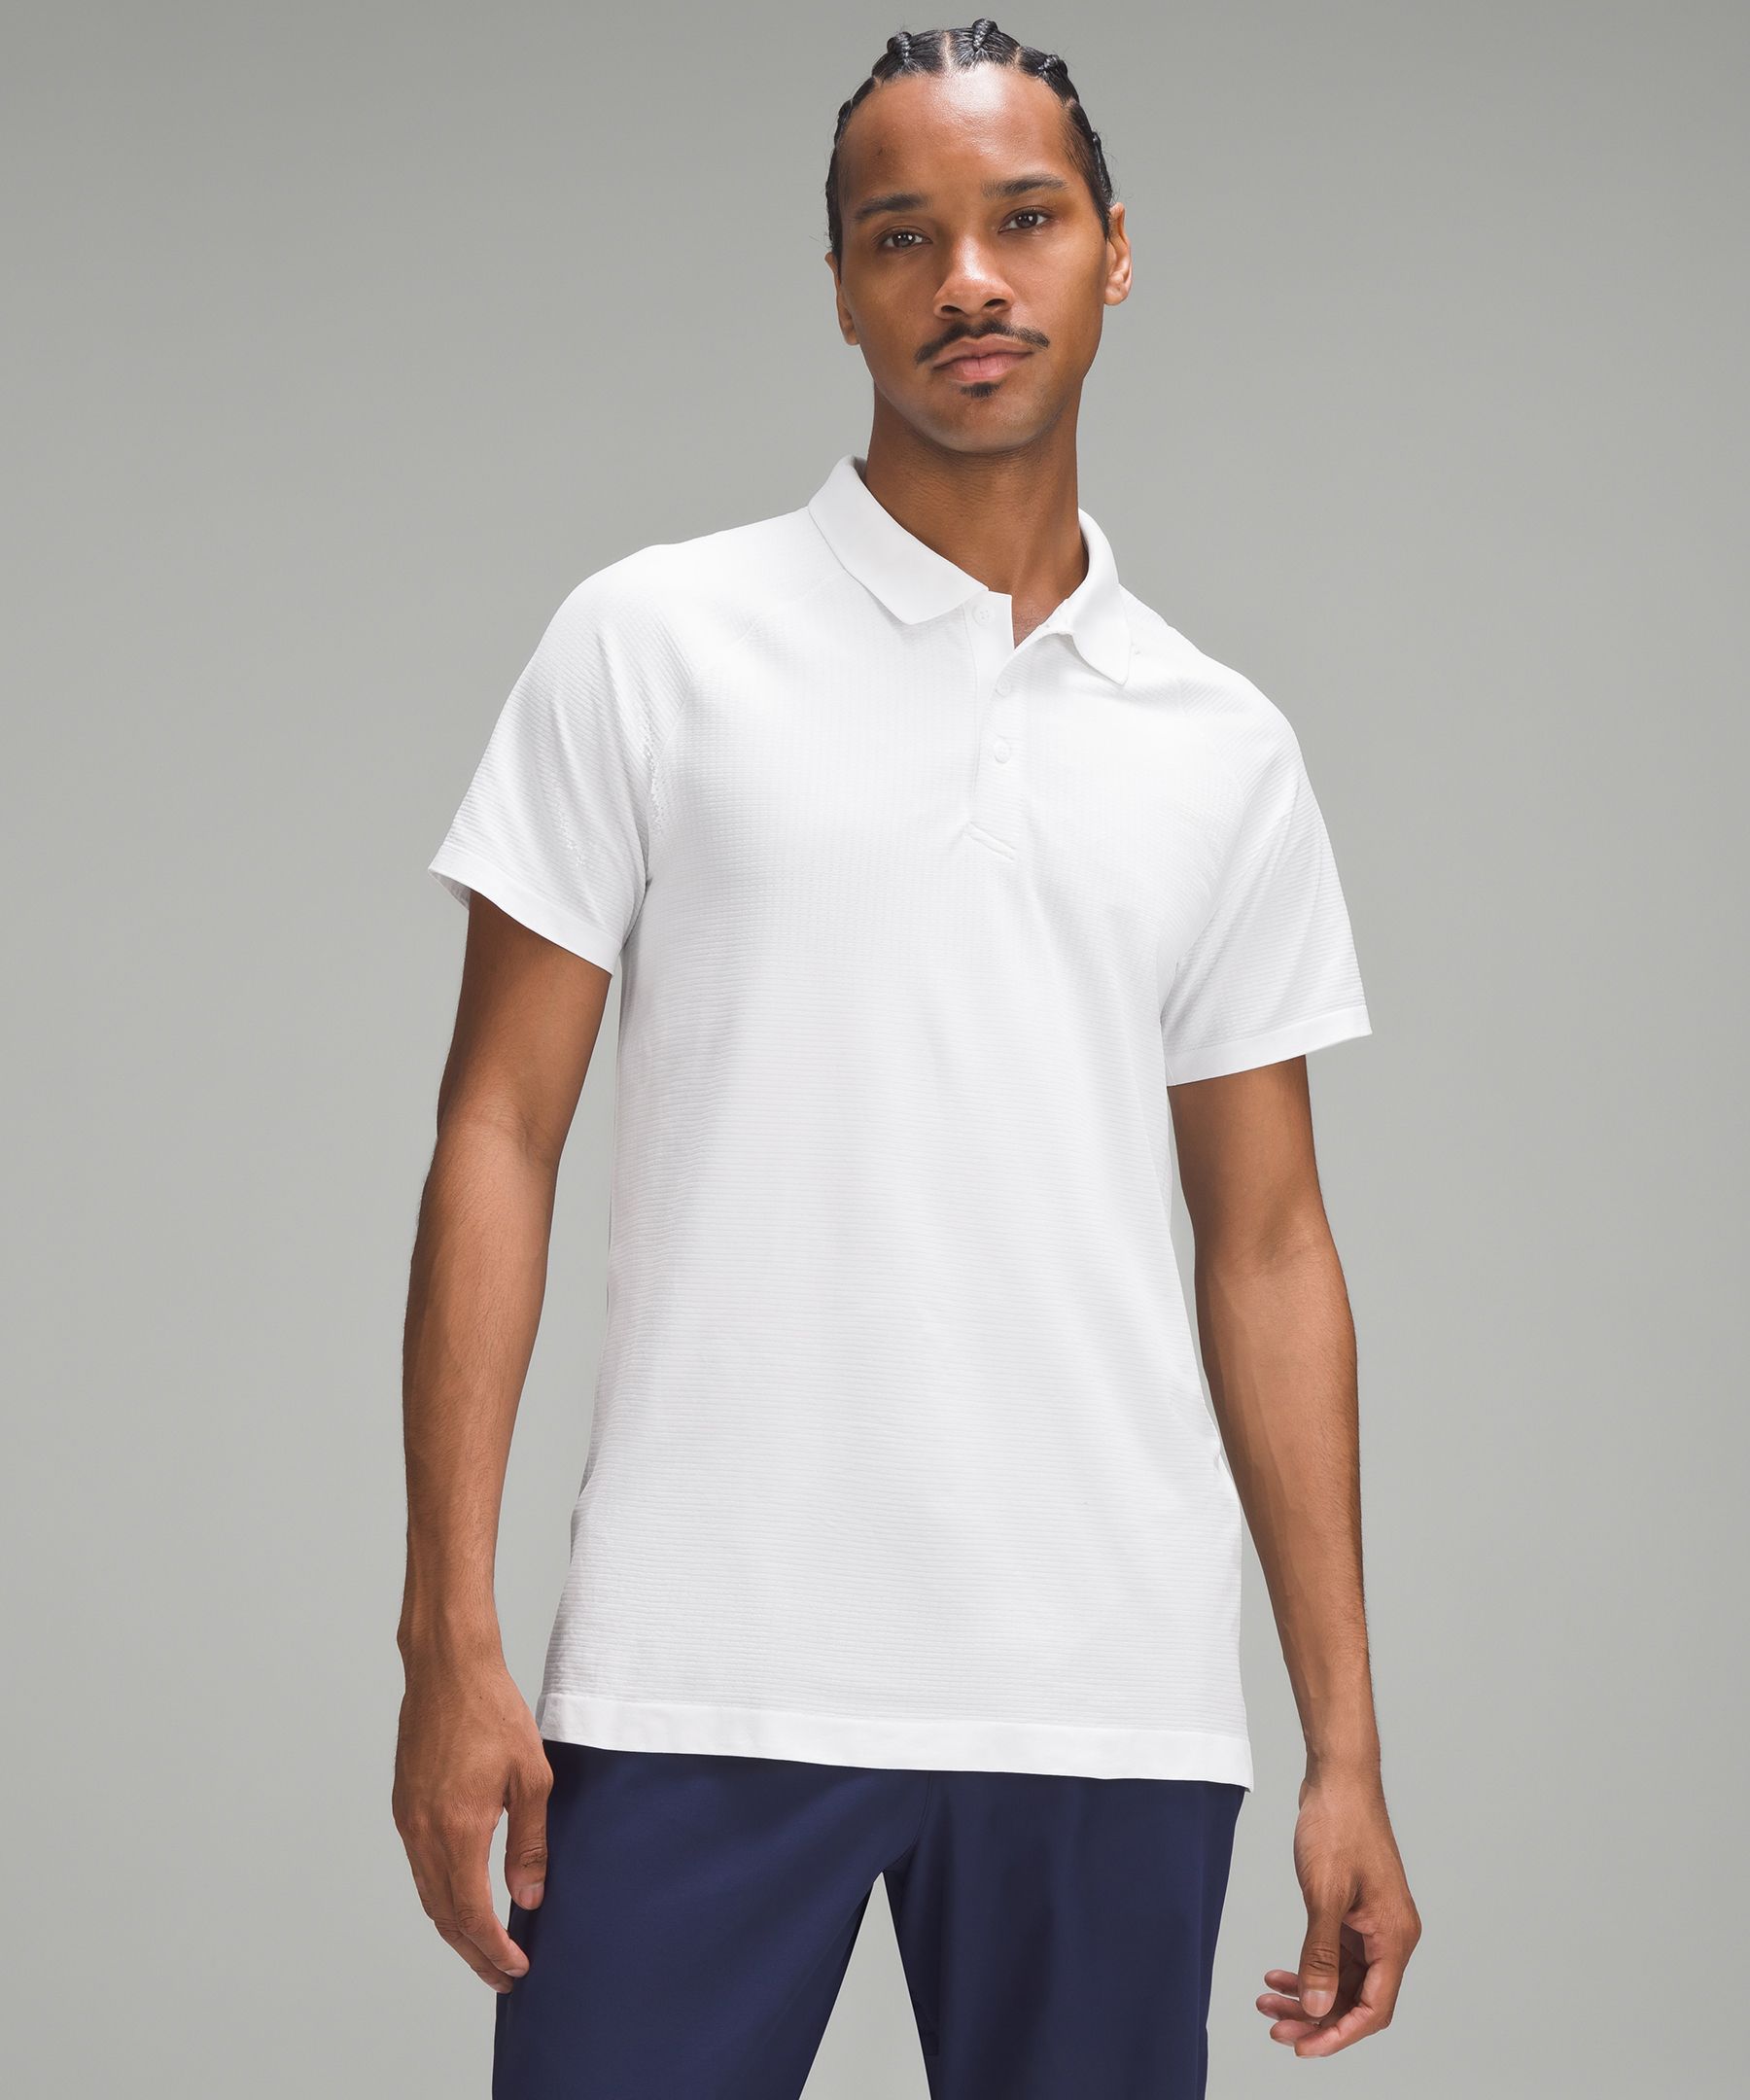 Metal Vent Tech Polo Shirt 2.0 | Men's Short Sleeve Shirts & Tee's ...